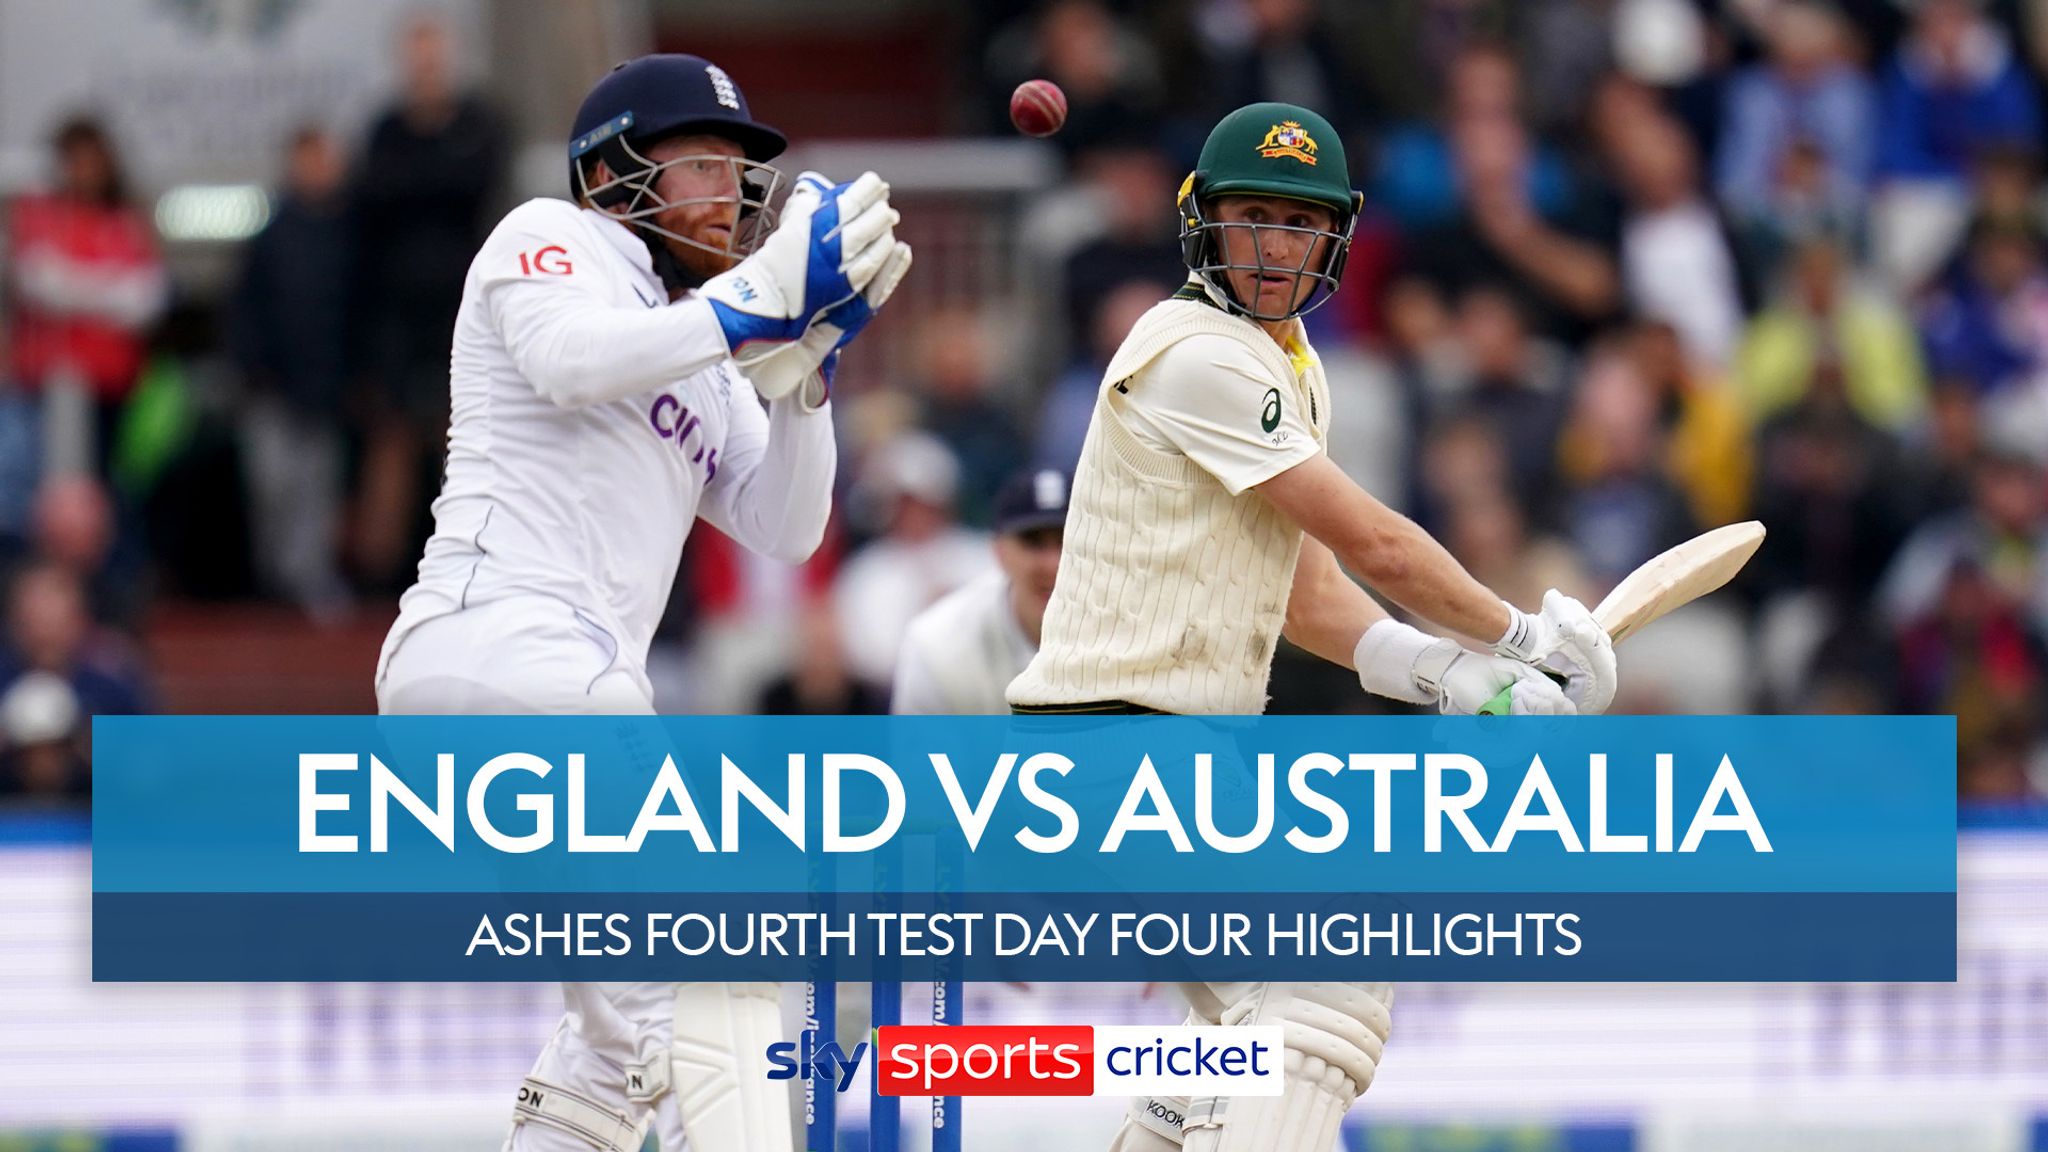 England vs Australia Day four, full highlights Video Watch TV Show Sky Sports